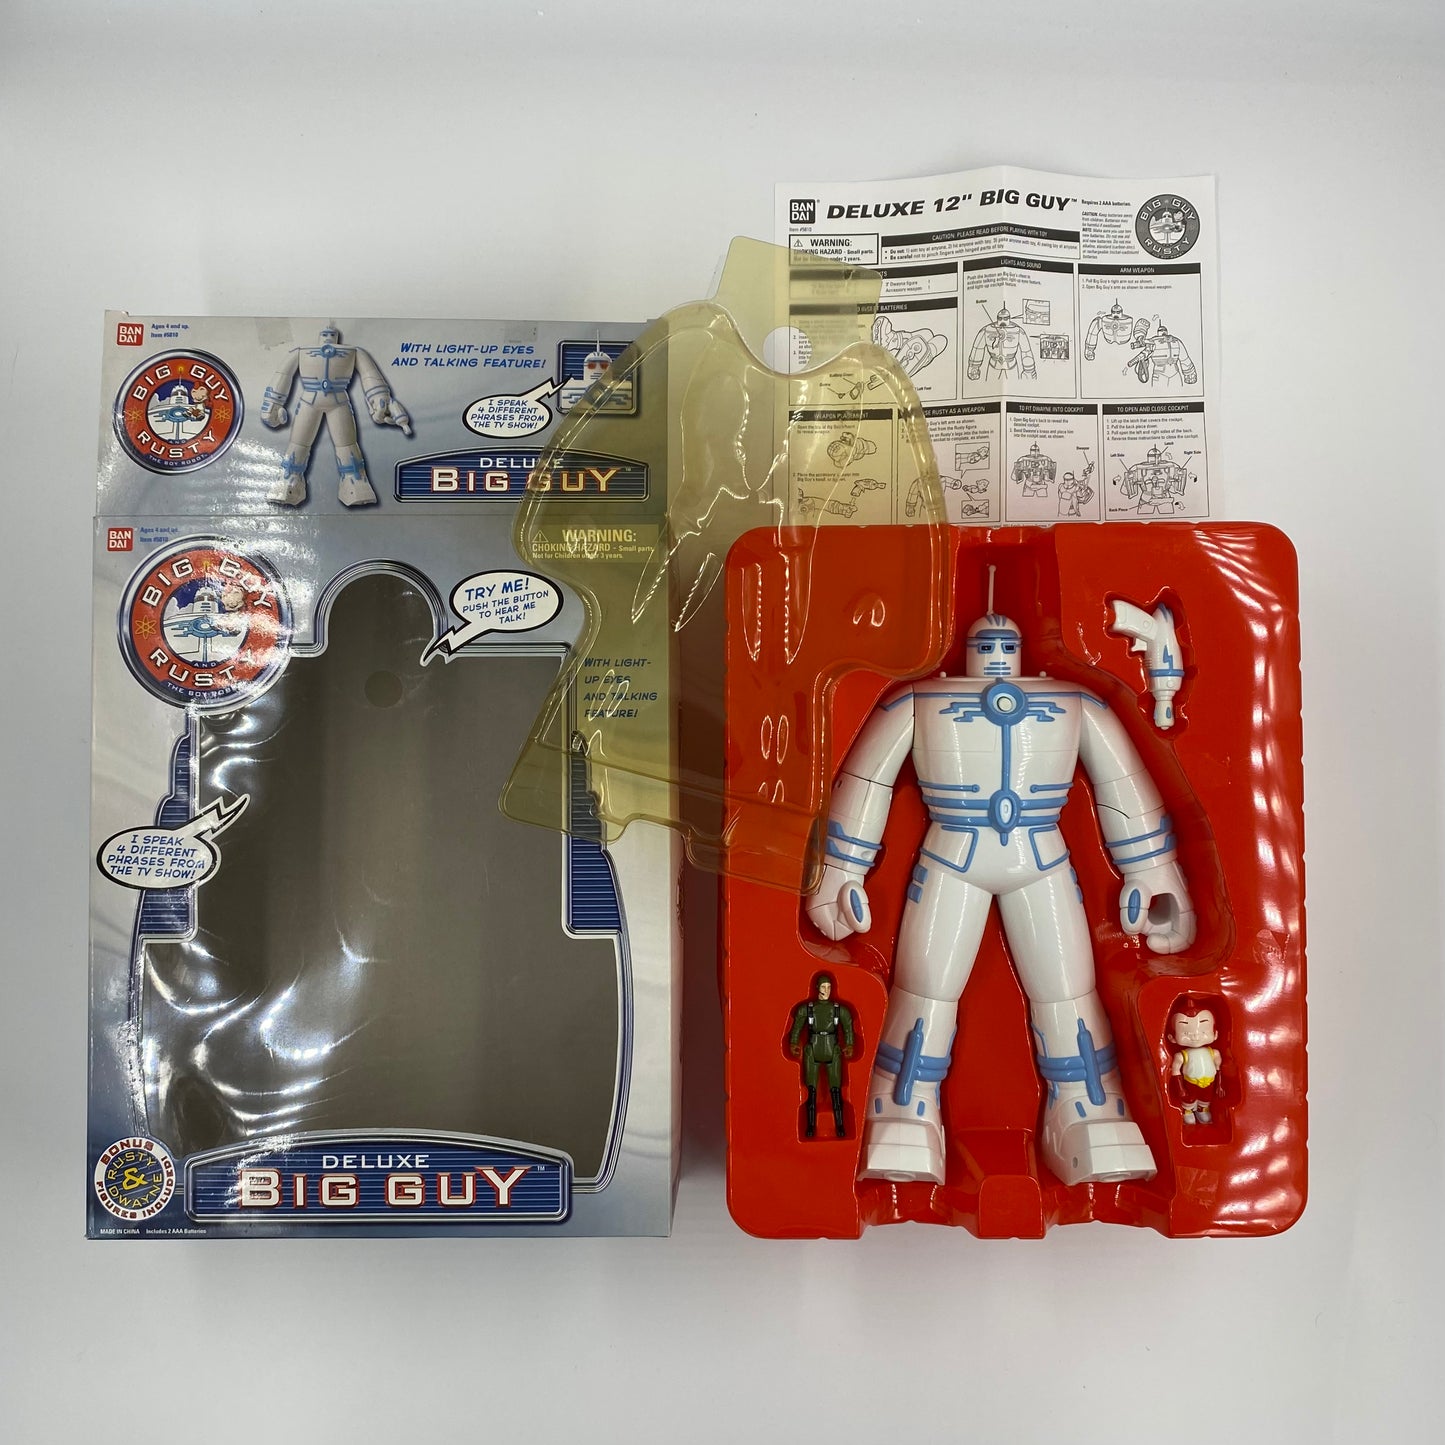 Big Guy and Rusty the Boy Robot Deluxe Big Guy boxed action figure set (1999) Bandai